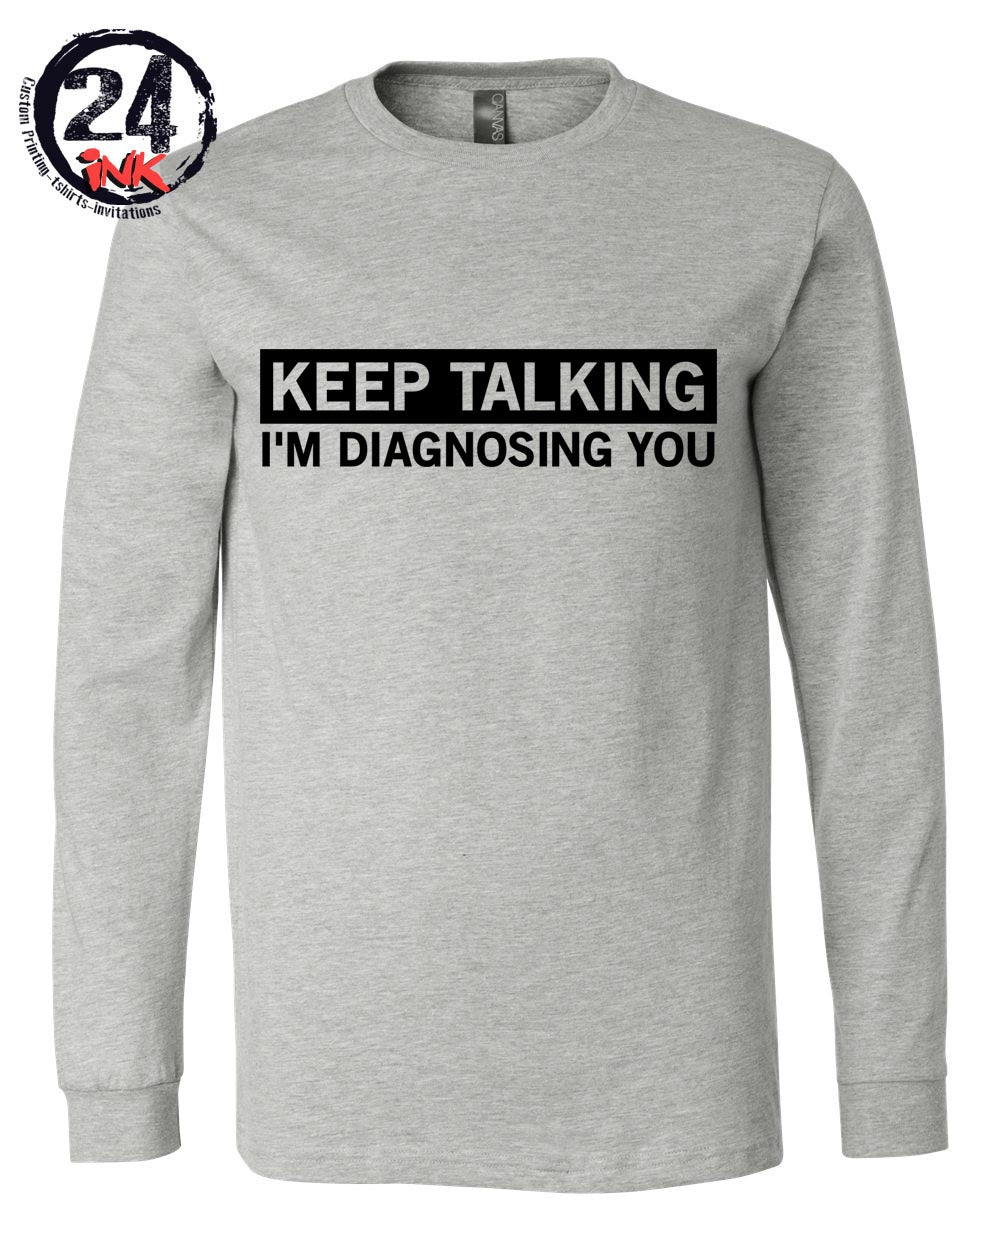 Keep talking while I Diagnosing you Shirt, Nurse